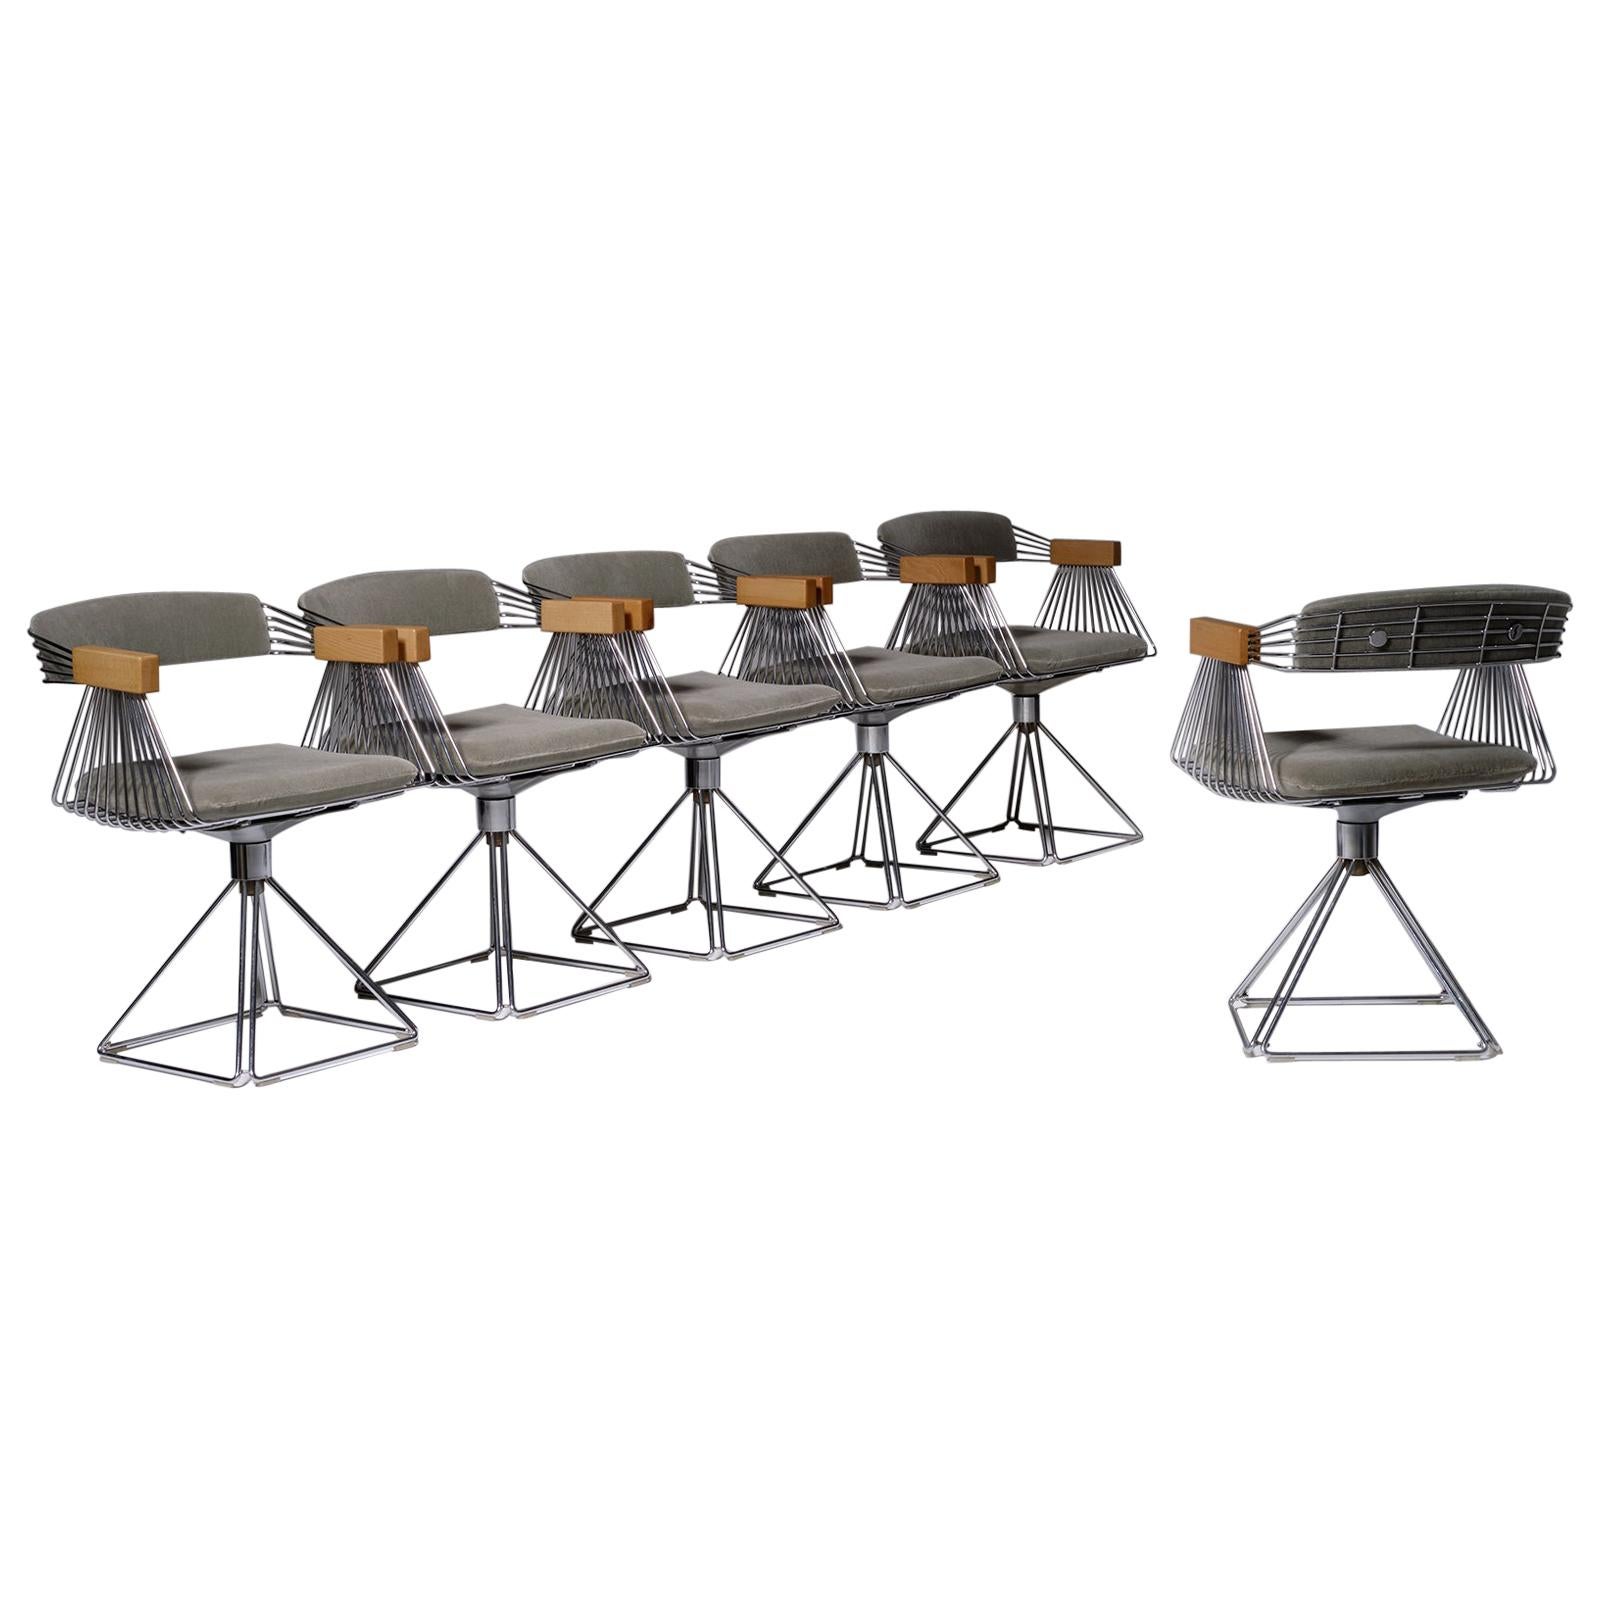 Set of Six ‘Delta’ Chairs by Rudi Verelst, 1971